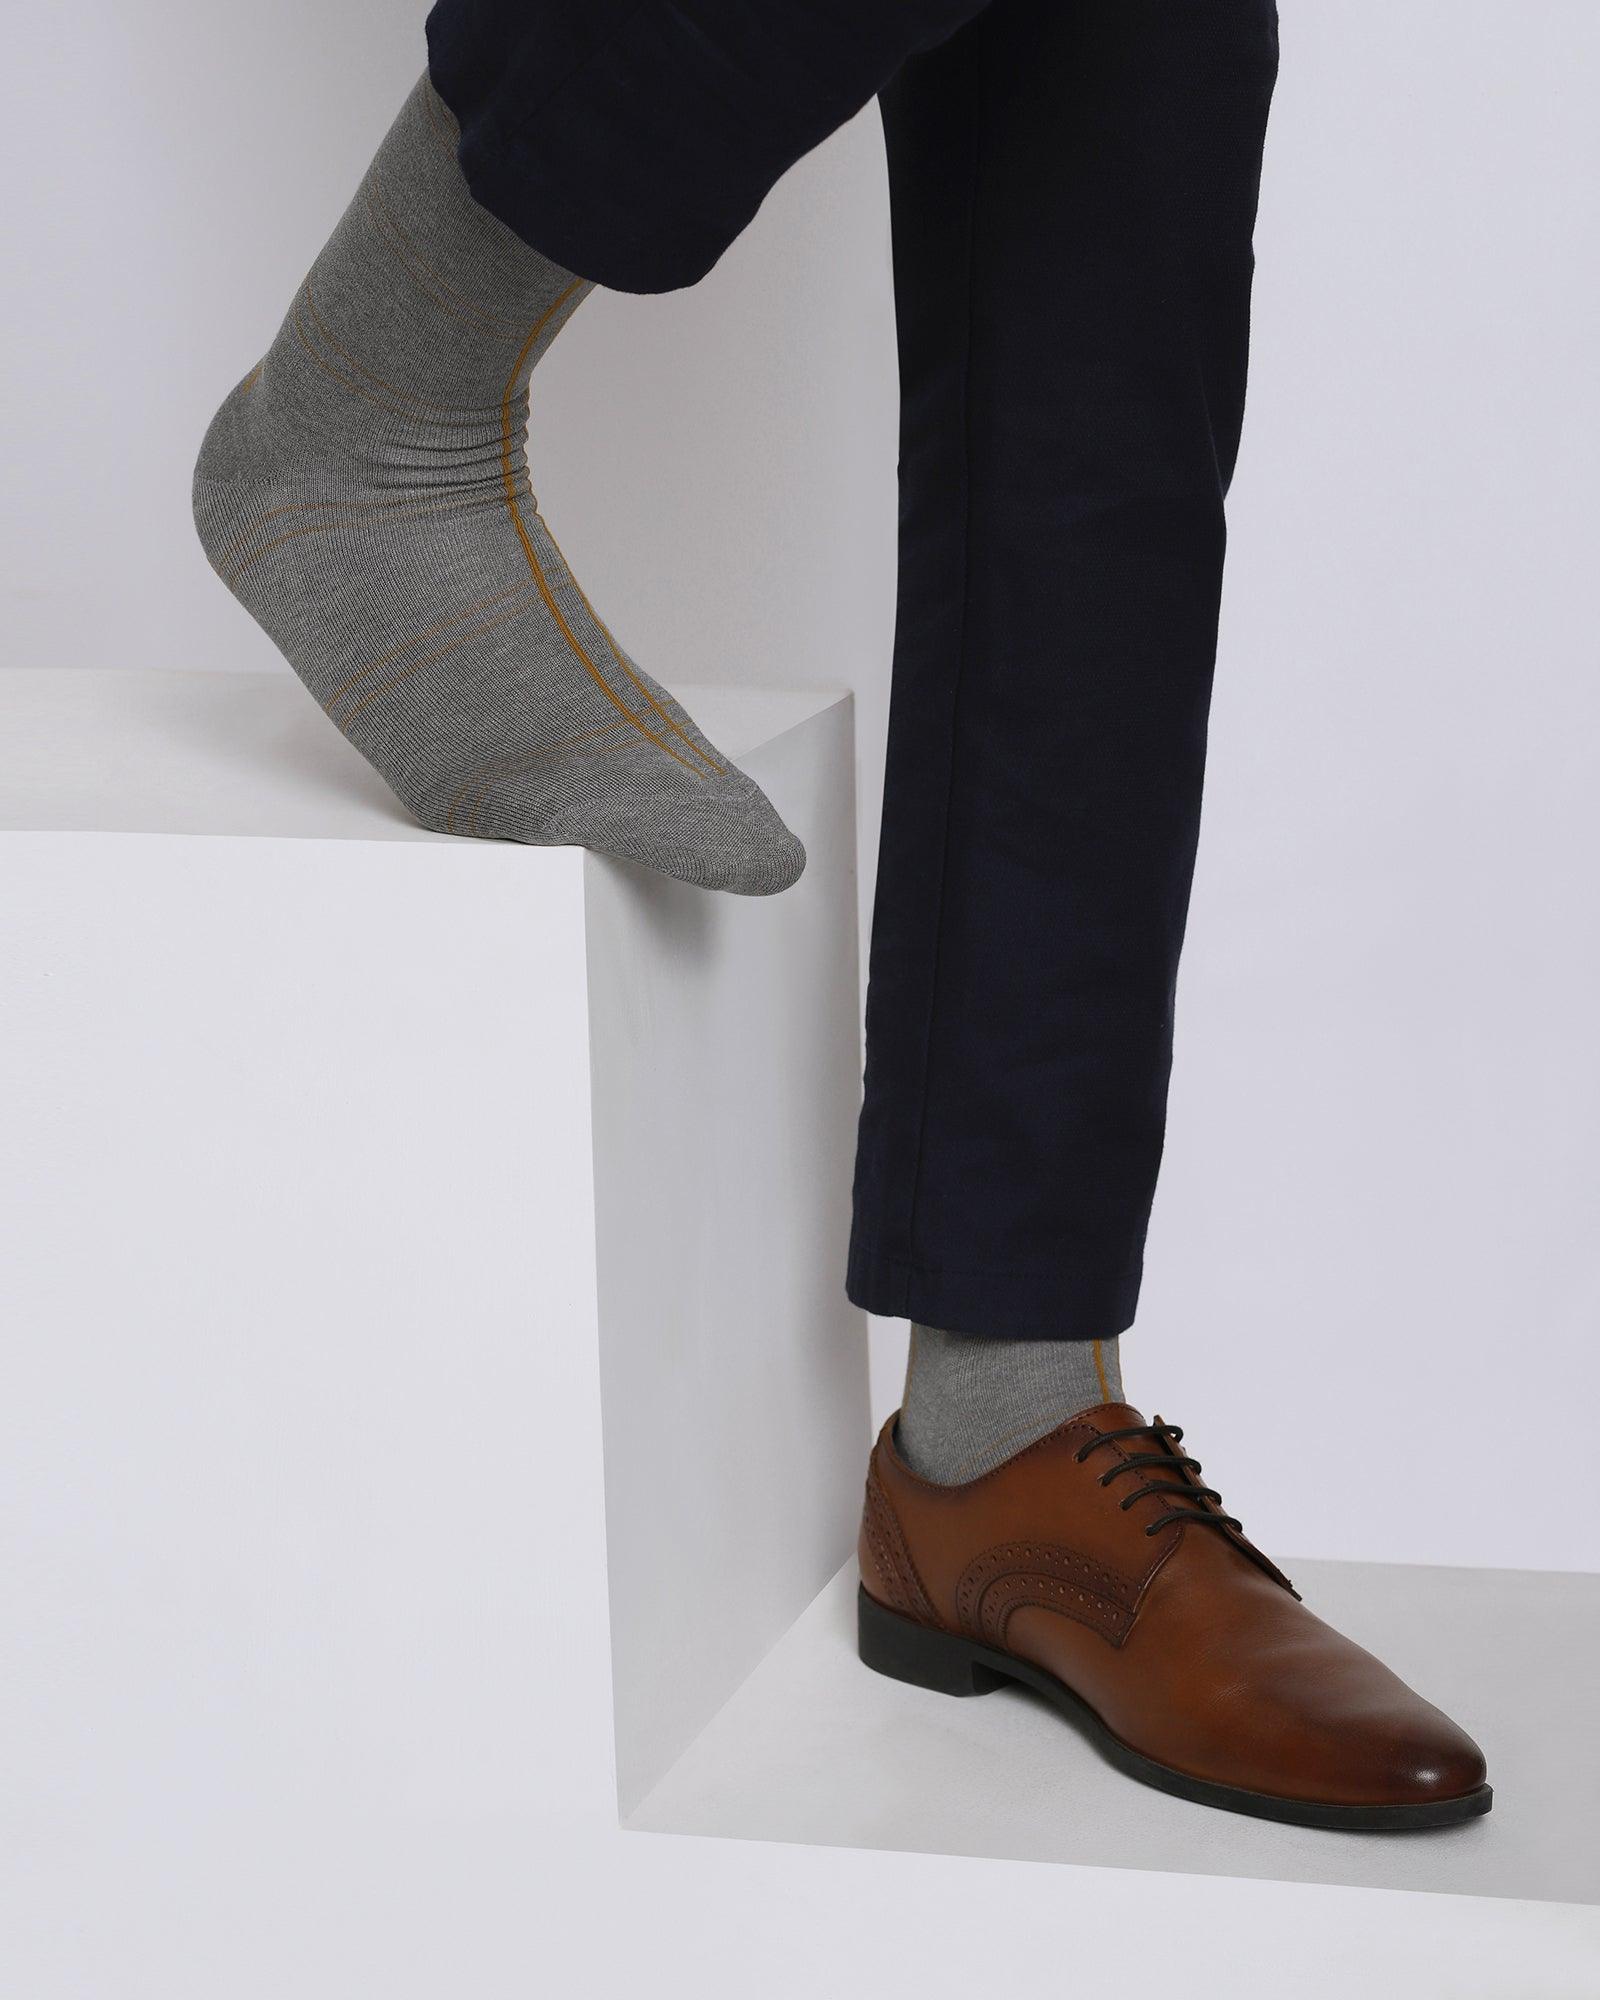 Cotton Grey Check Socks - Omne